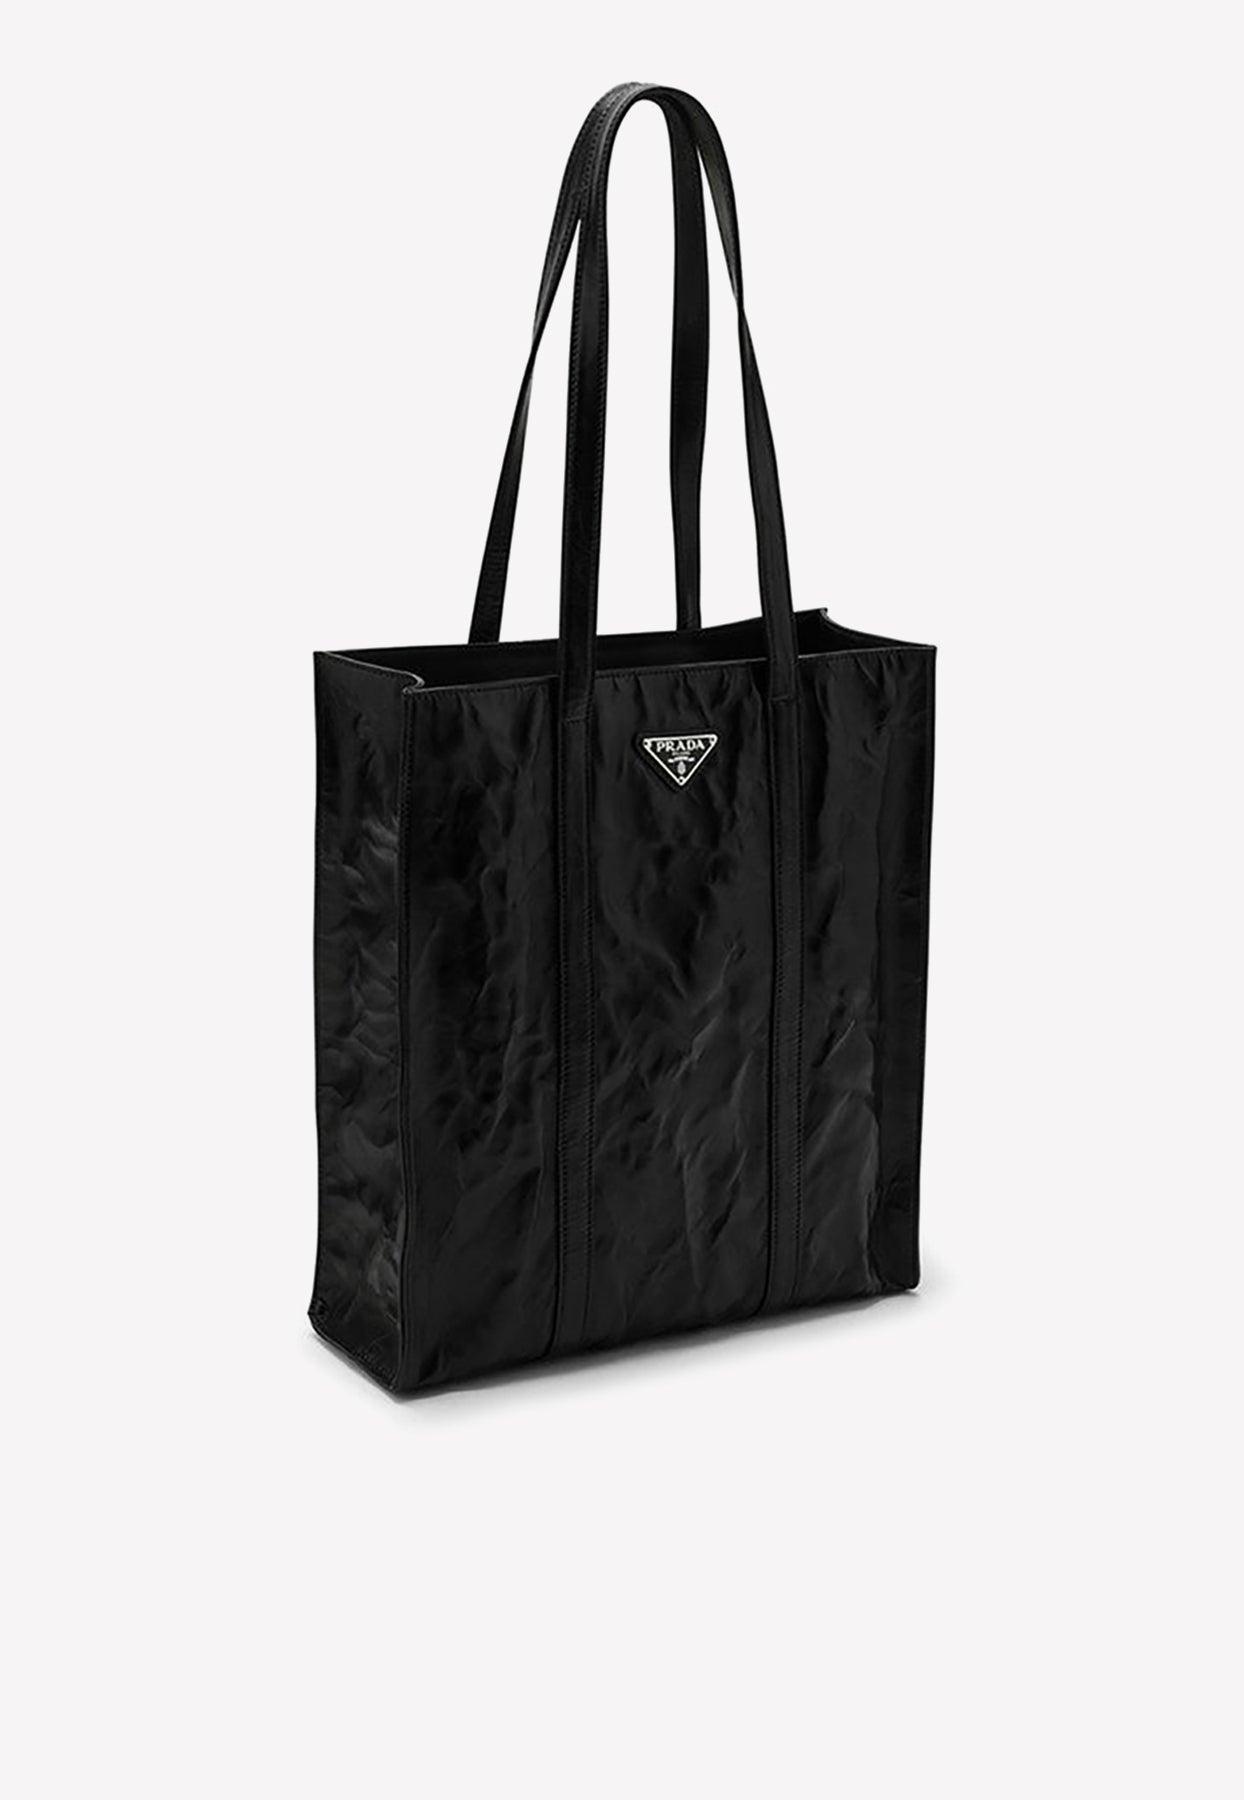 Prada Crinkled Leather Tote Bag in Black | Lyst